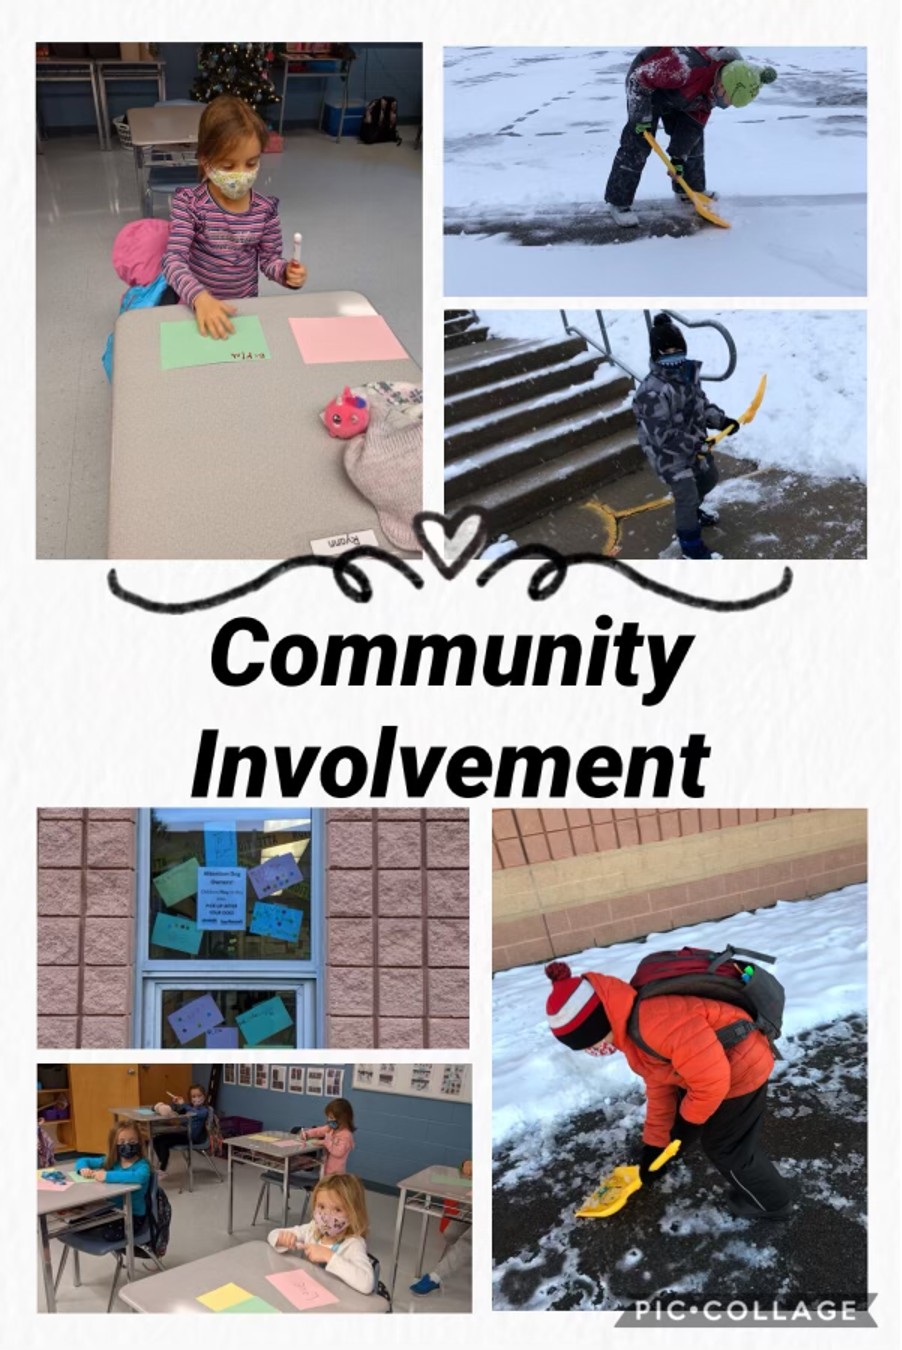 Allan A. Greenleaf Community Involvement Project